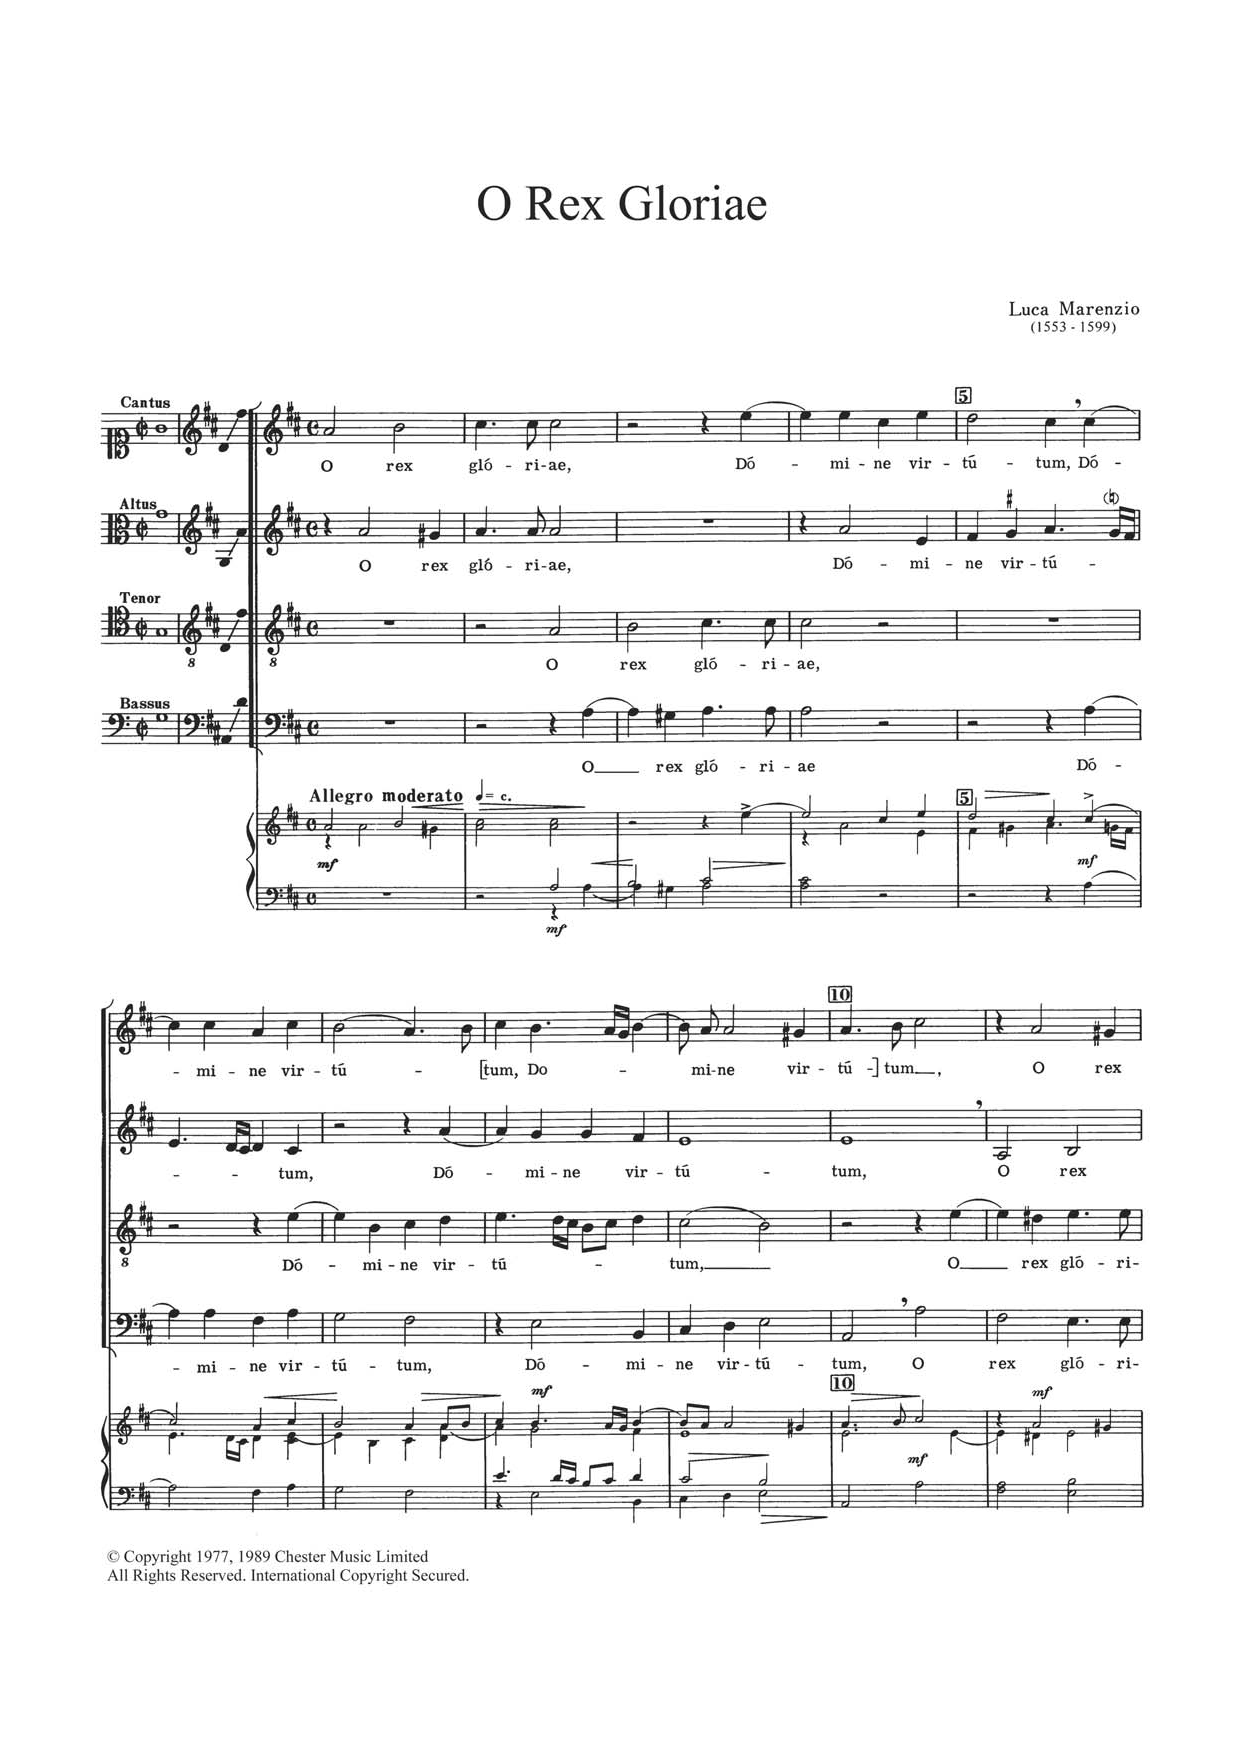 Luca Marenzio O Rex Gloriae Sheet Music Notes & Chords for Choir - Download or Print PDF